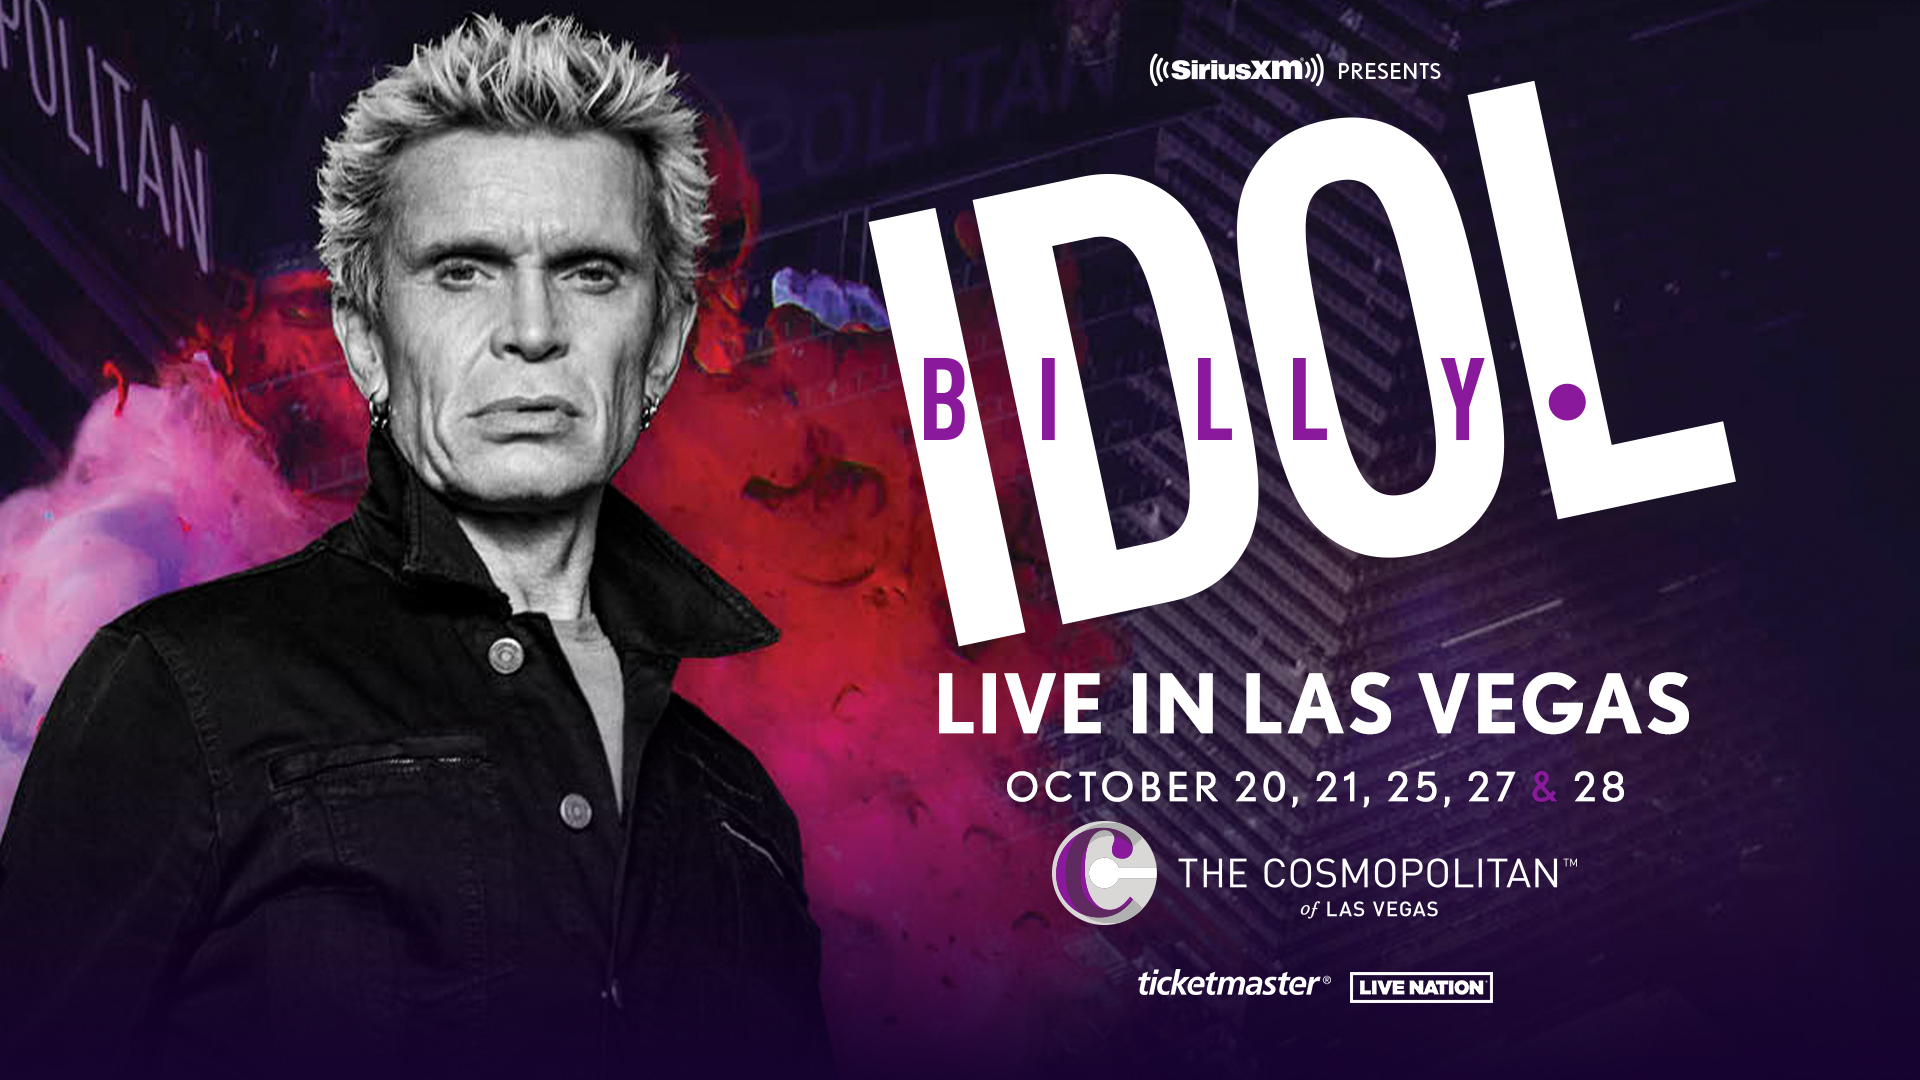 SiriusXM Presents Billy Idol Live in Las Vegas